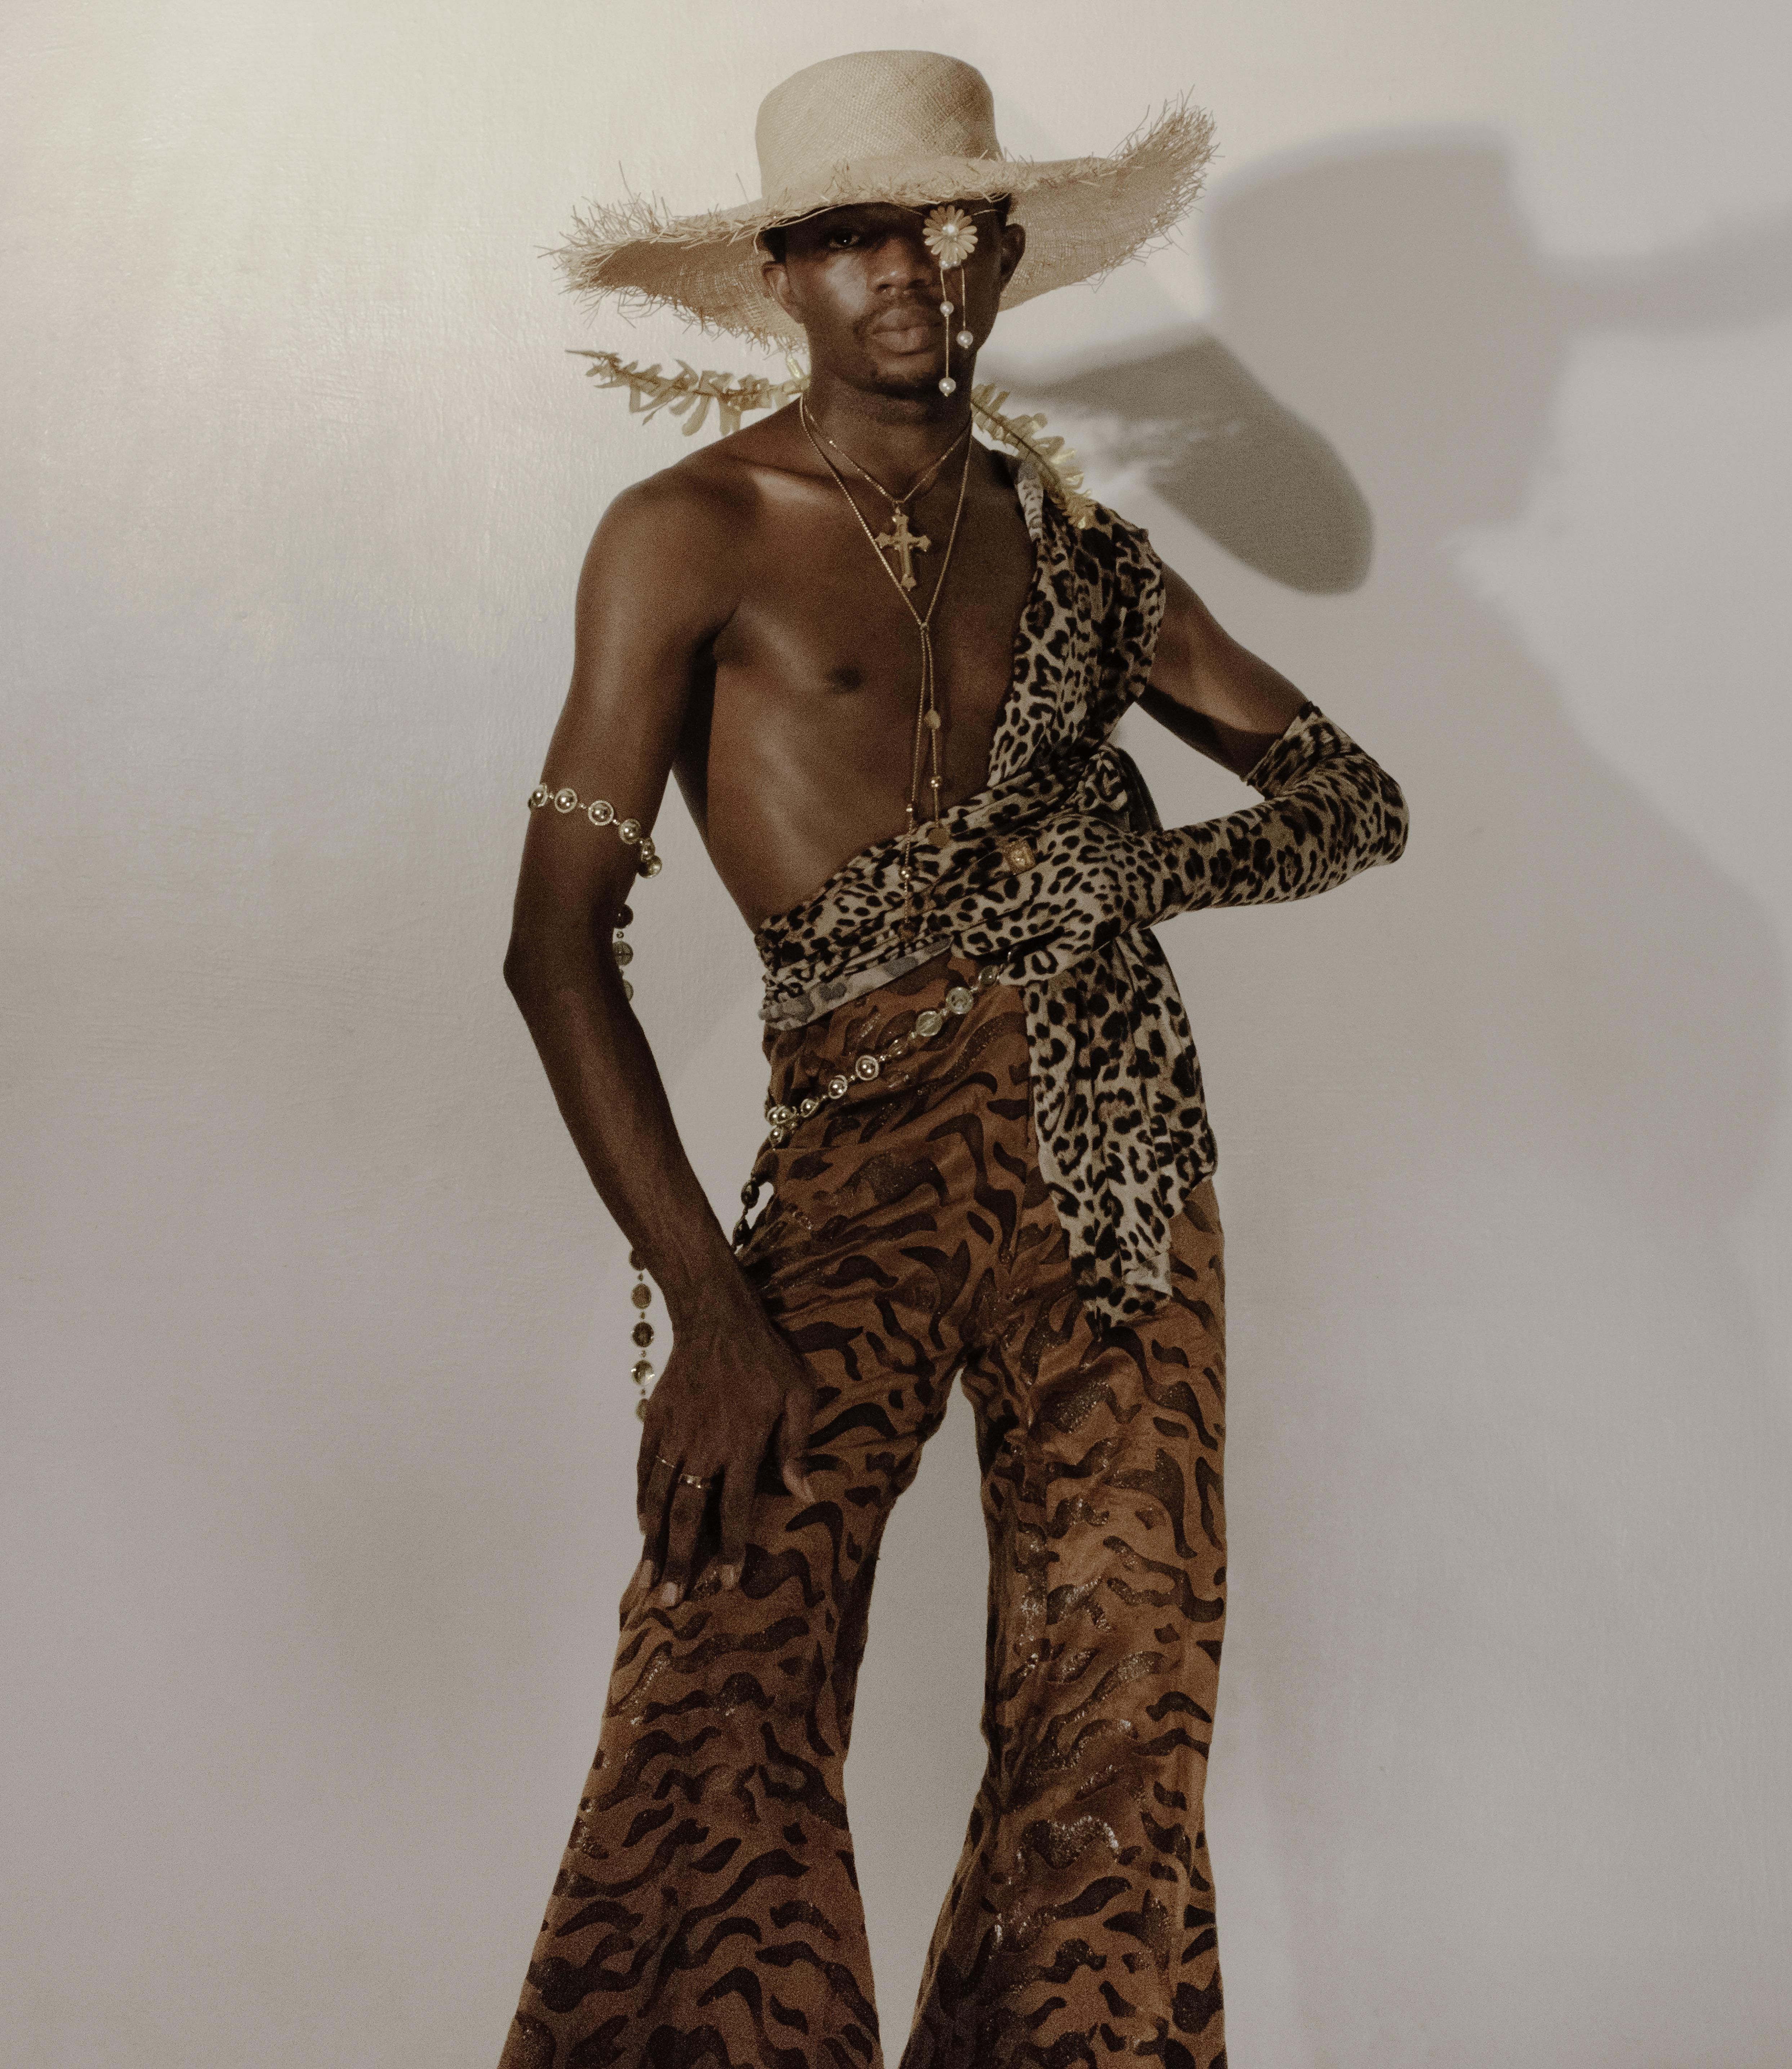 Photographer Daniel Obasi on Breaking Gender Stereotypes